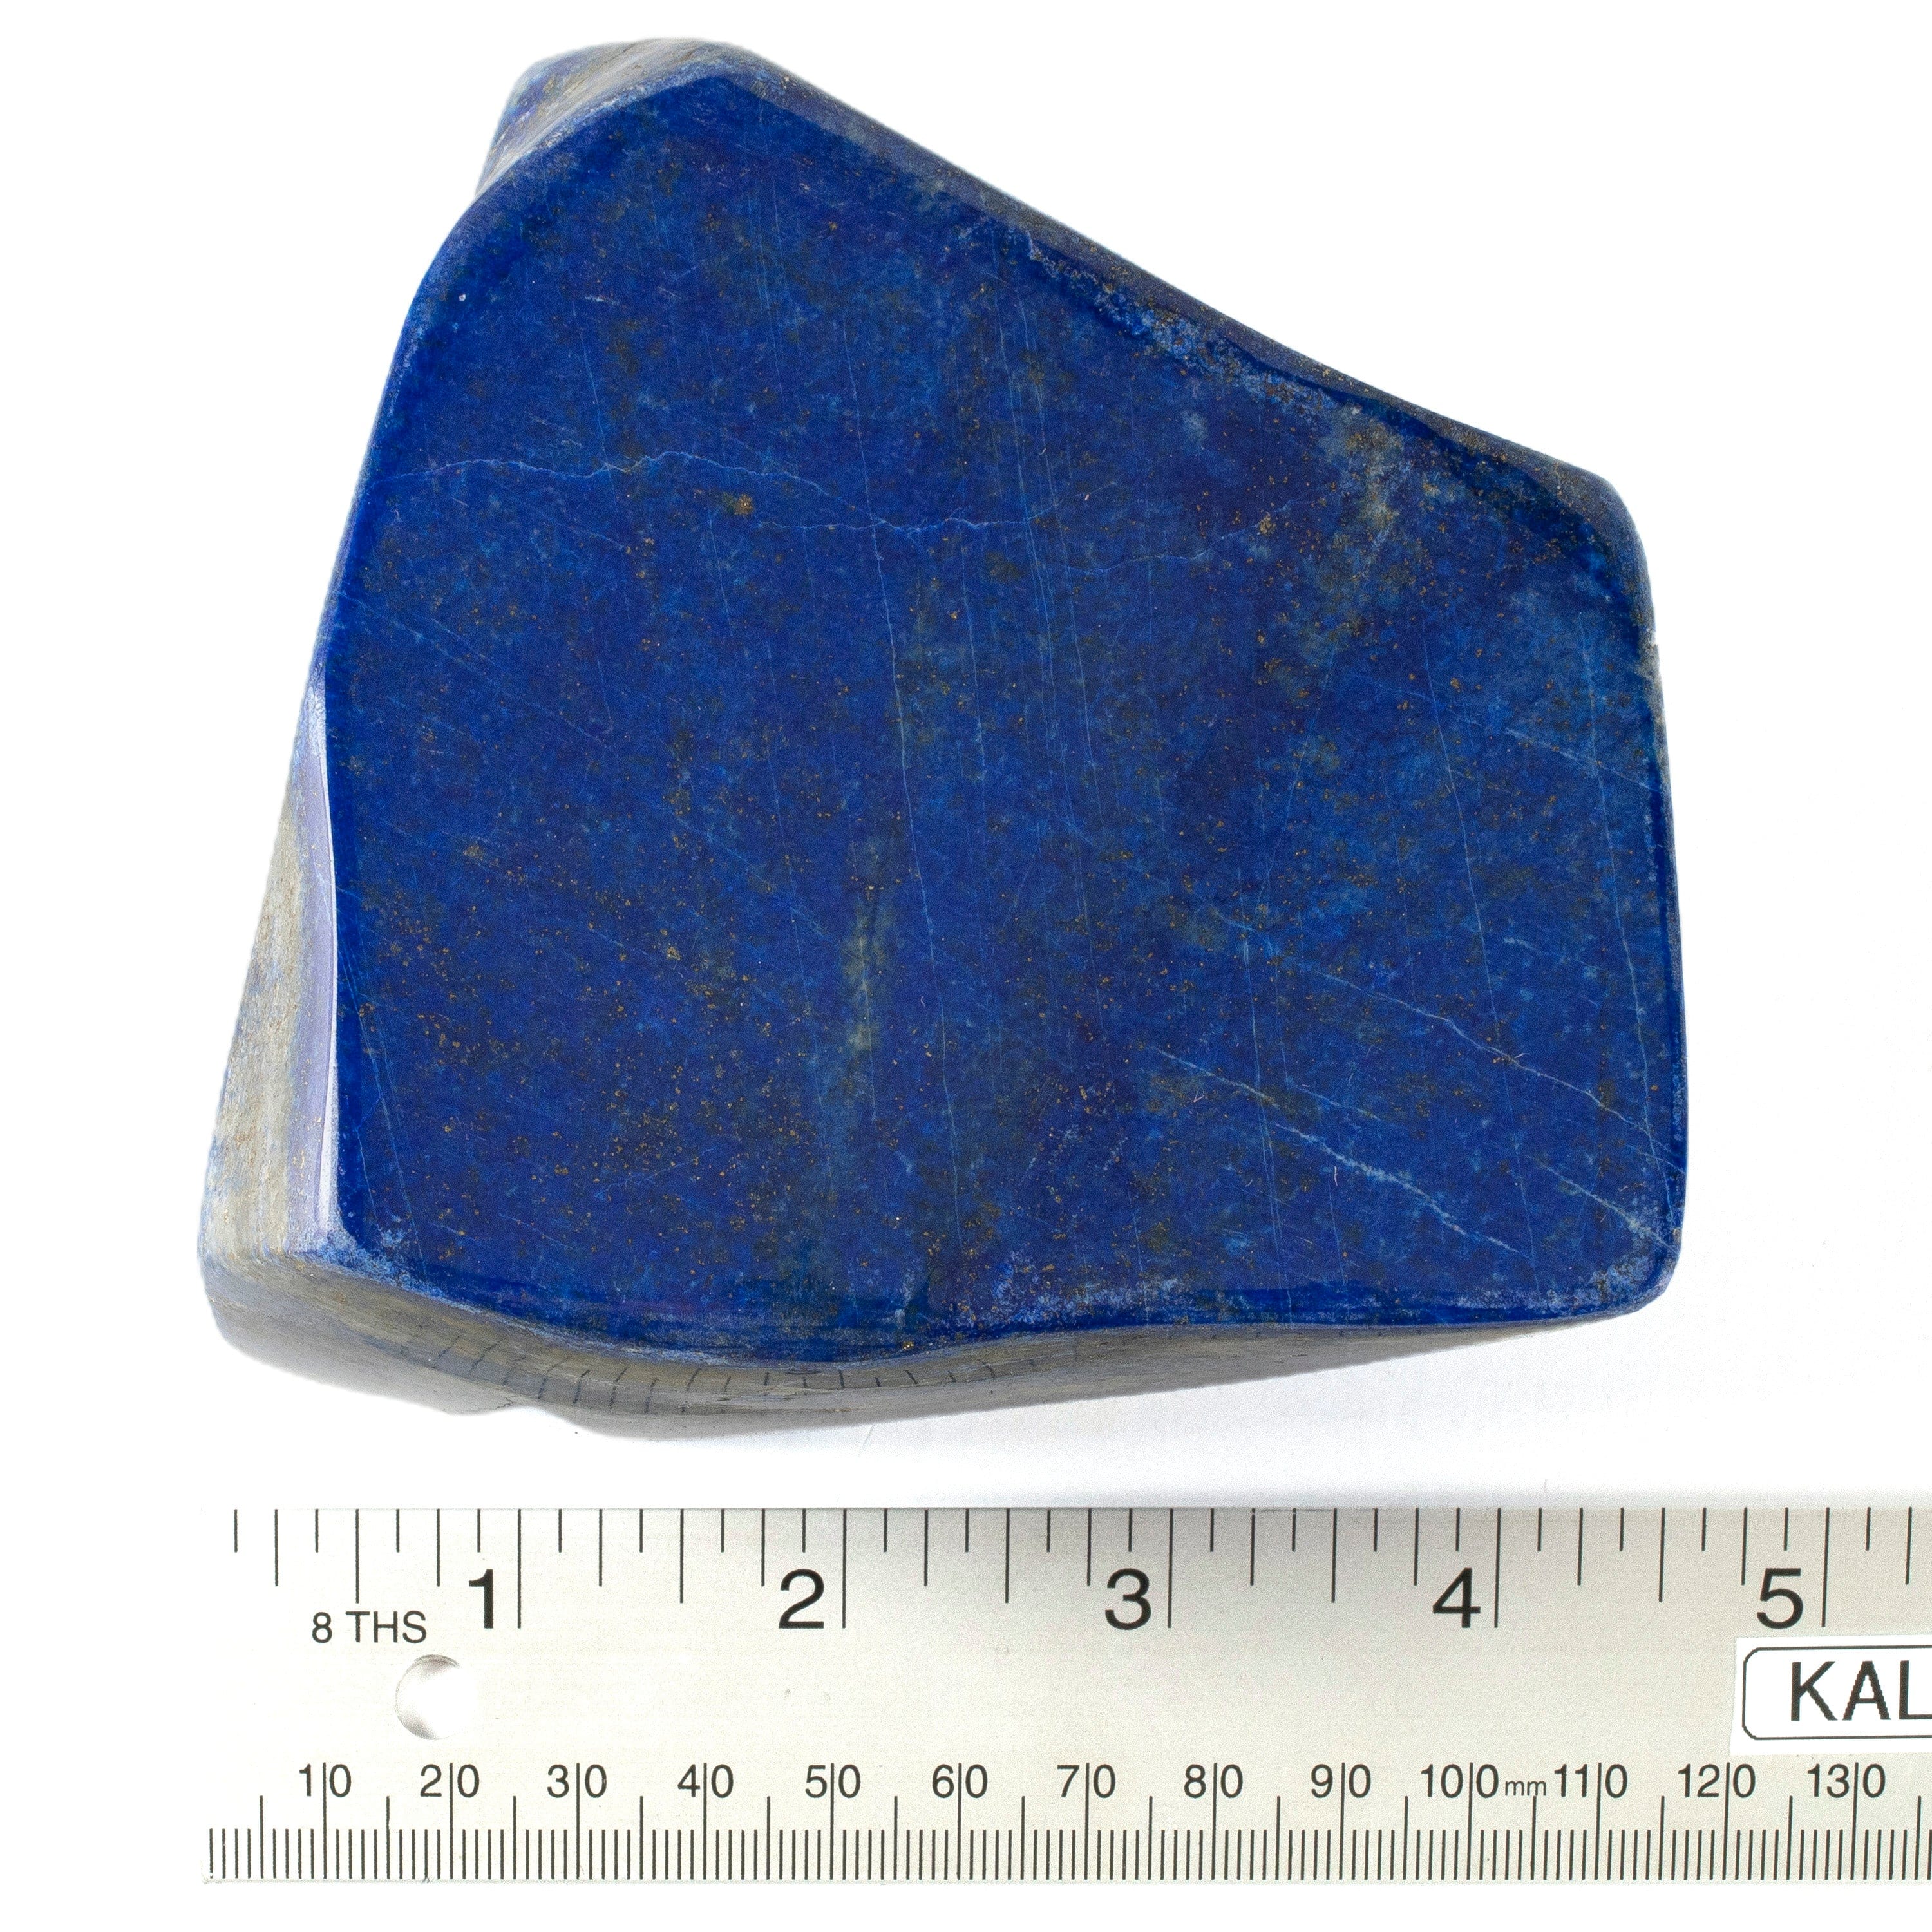 Kalifano Lapis Lapis Lazuli Freeform from Afghanistan - 3.5" / 925 grams LP950.001